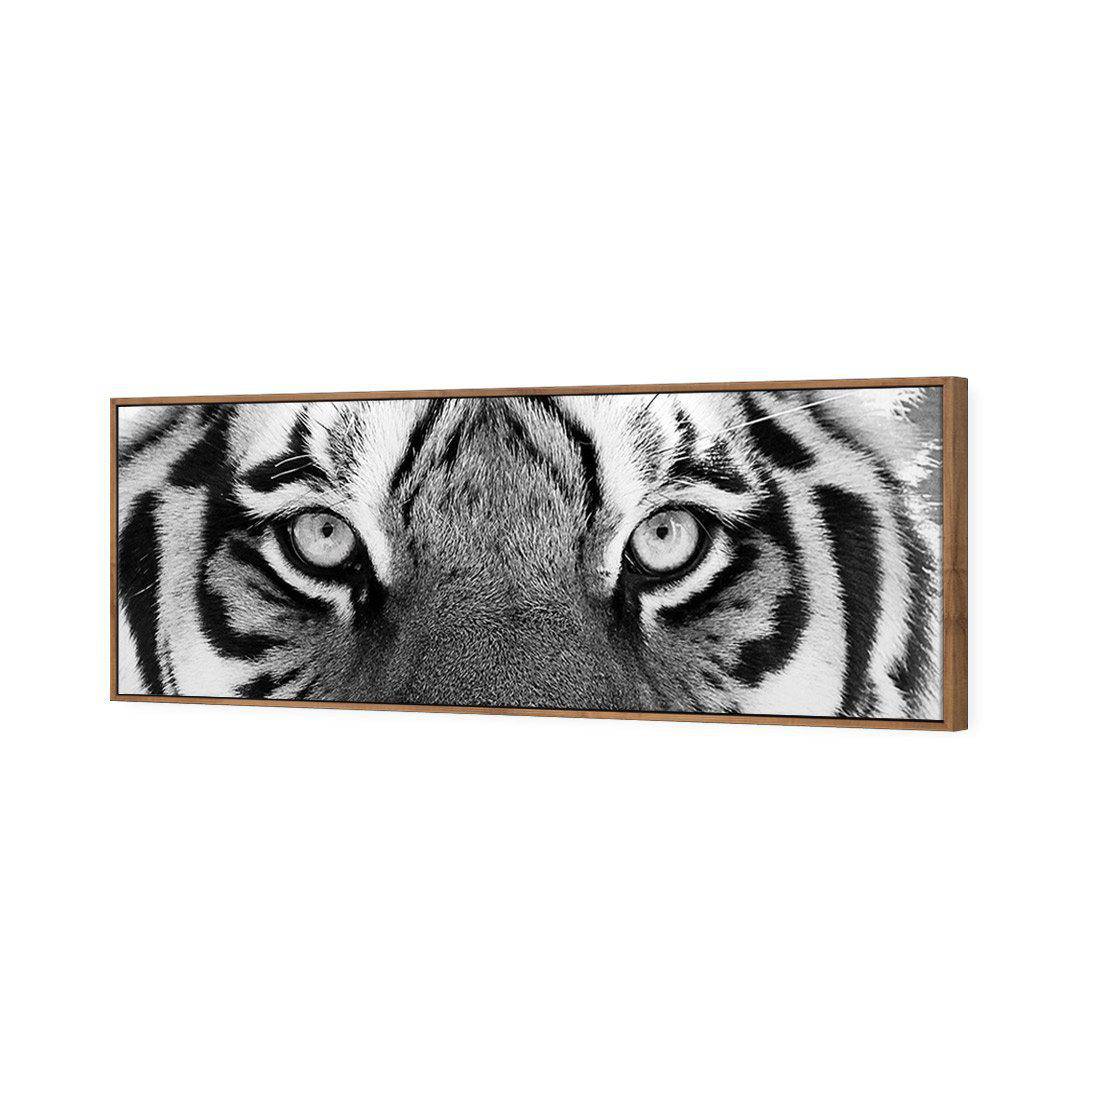 Tiger Eyes, B&W Canvas Art-Canvas-Wall Art Designs-60x20cm-Canvas - Natural Frame-Wall Art Designs